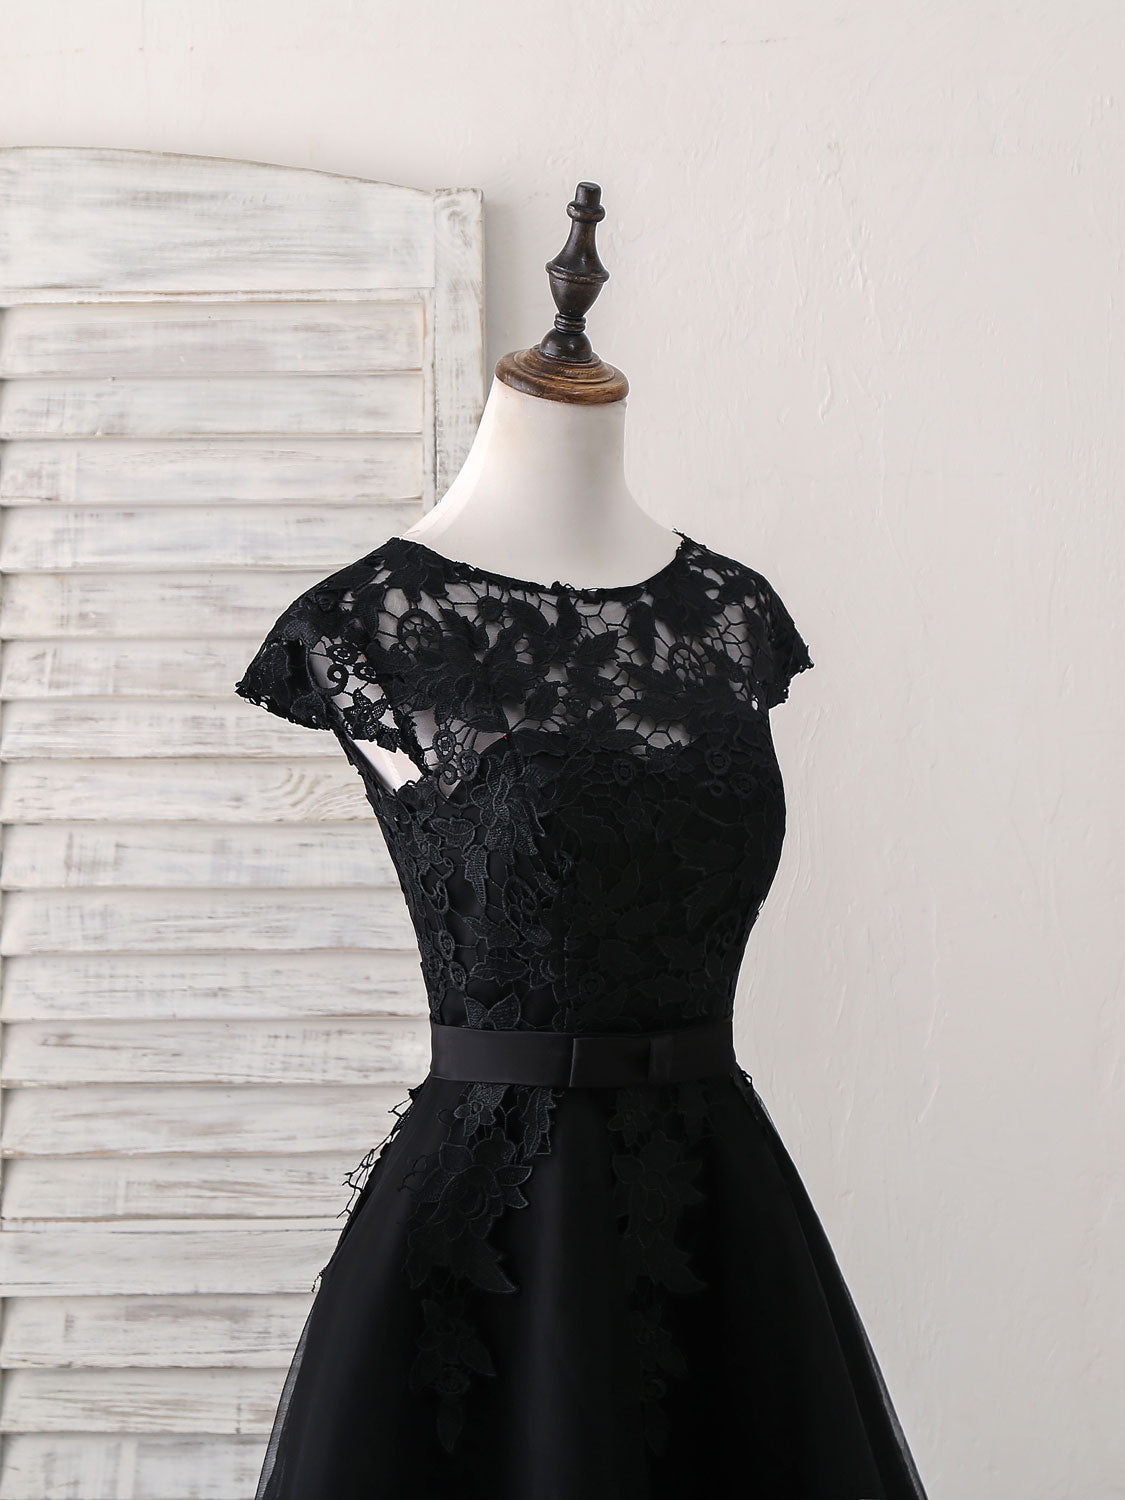 Party Dresses Sales, Black Round Neck Tulle Lace Applique Short Prom Dress, Black Homecoming Dress